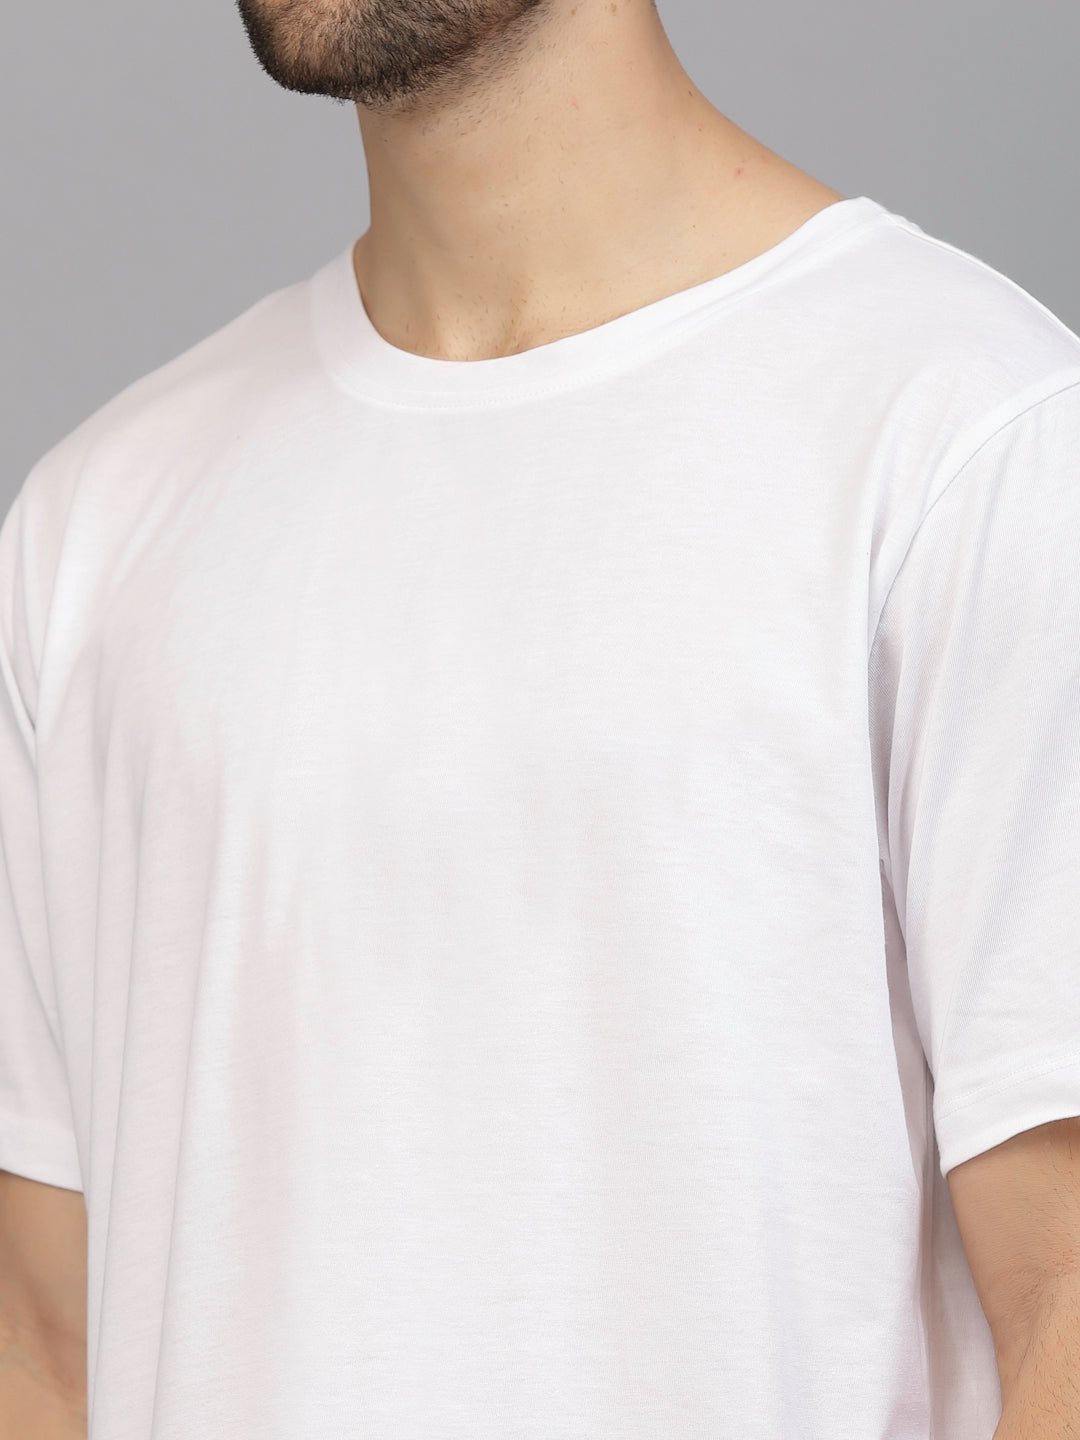 Printed Oversized Half Sleeves Round Neck Cotton T-Shirt